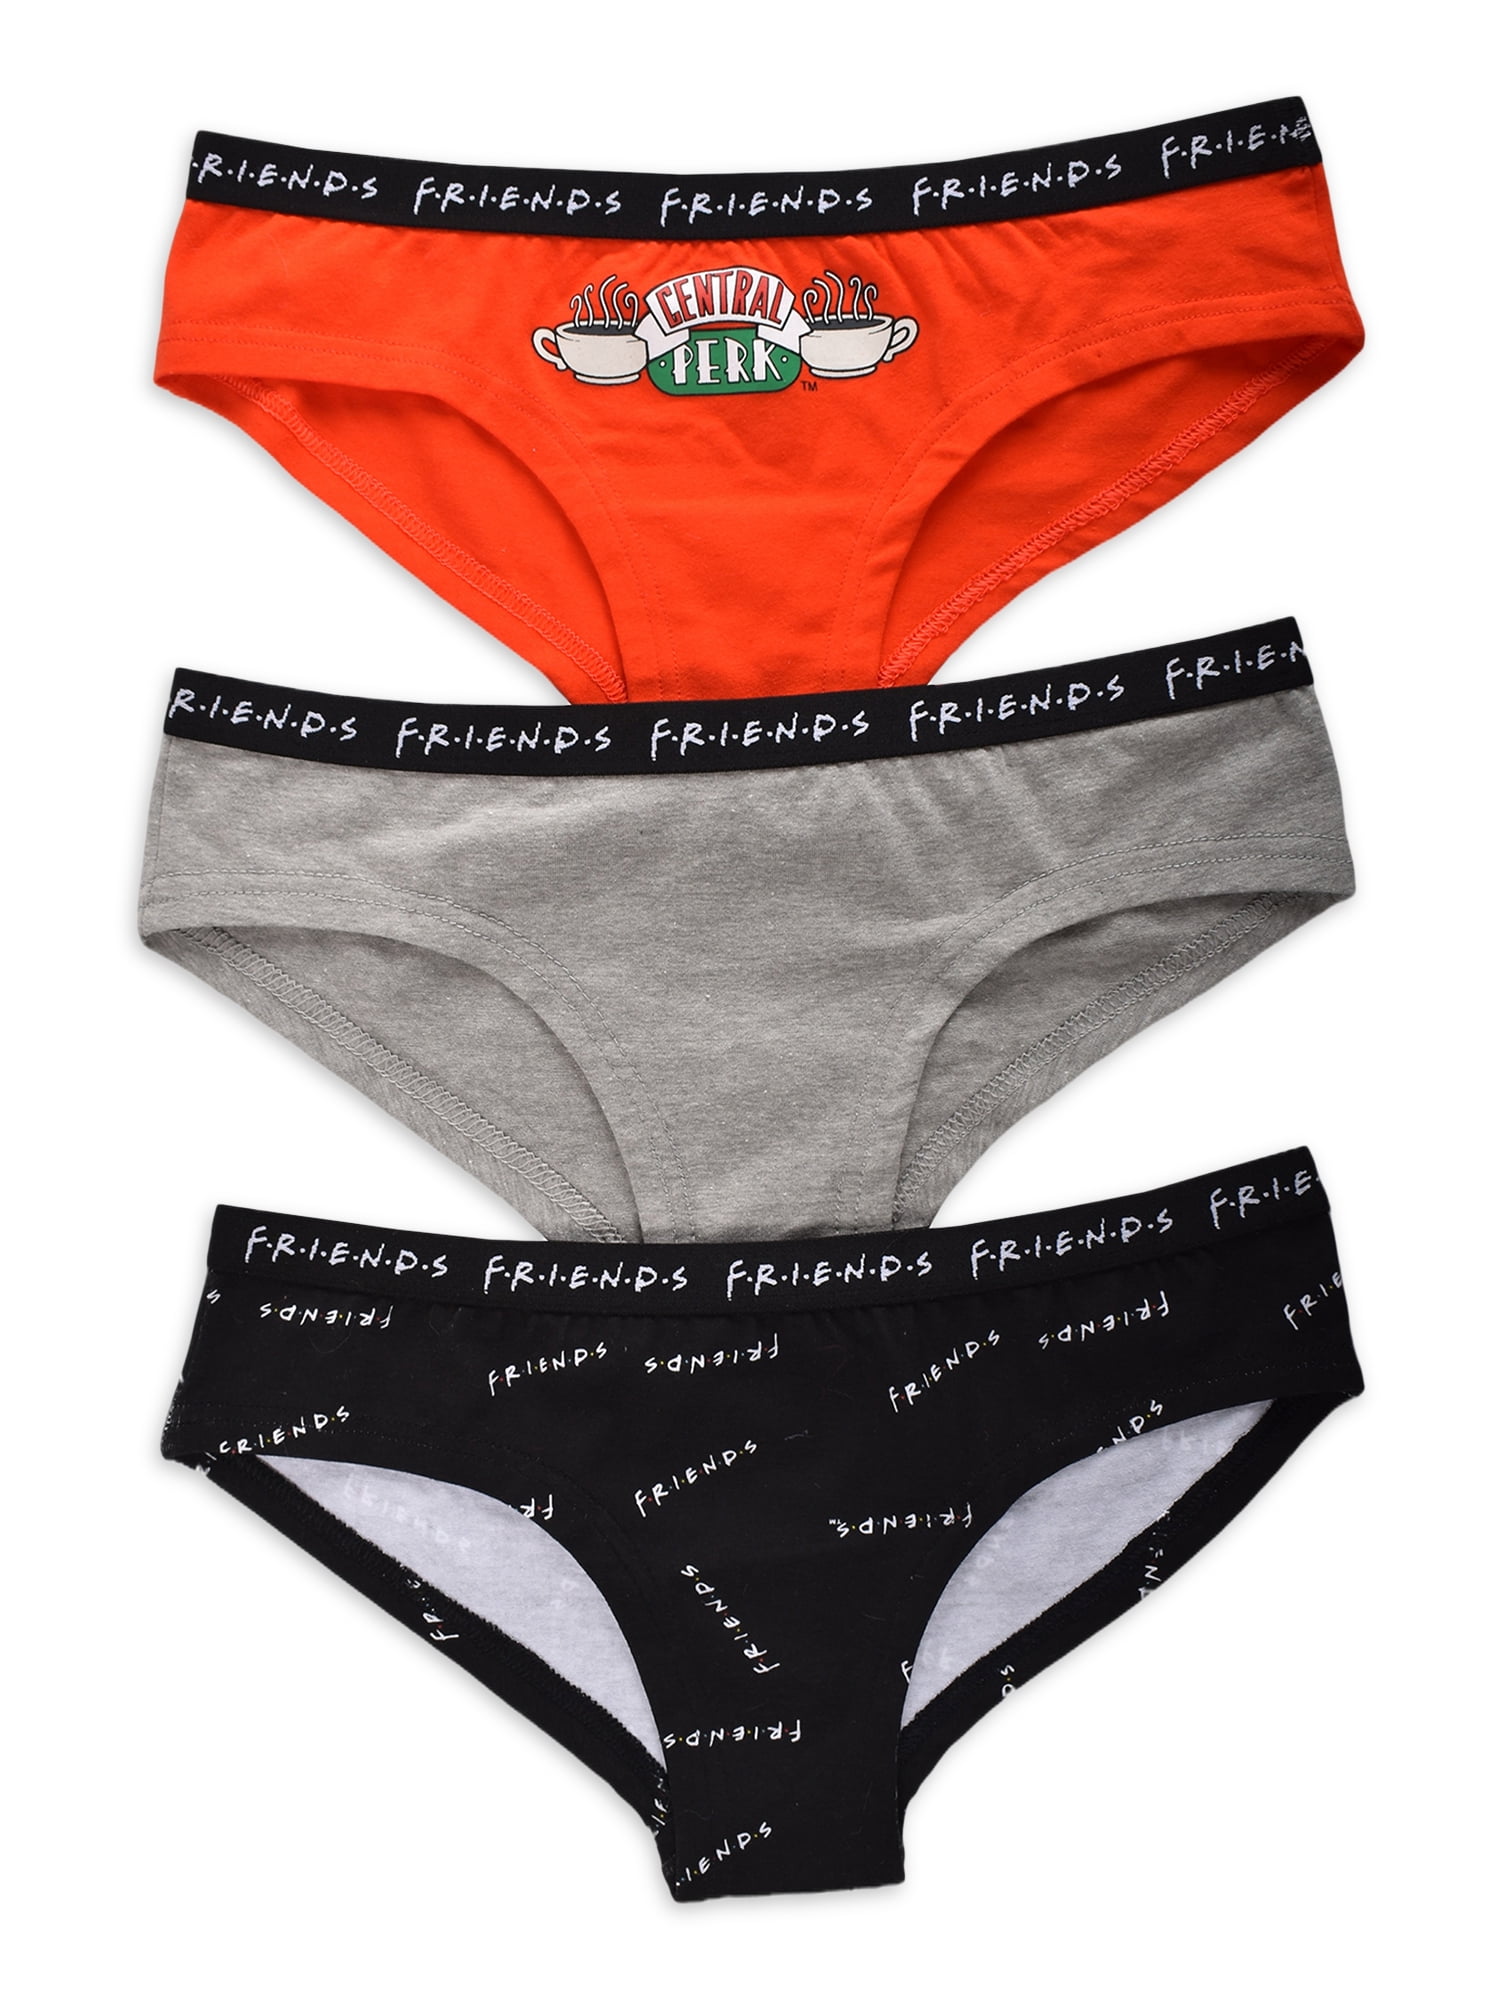 Friends Women's Hipster Panties, 3 Pack